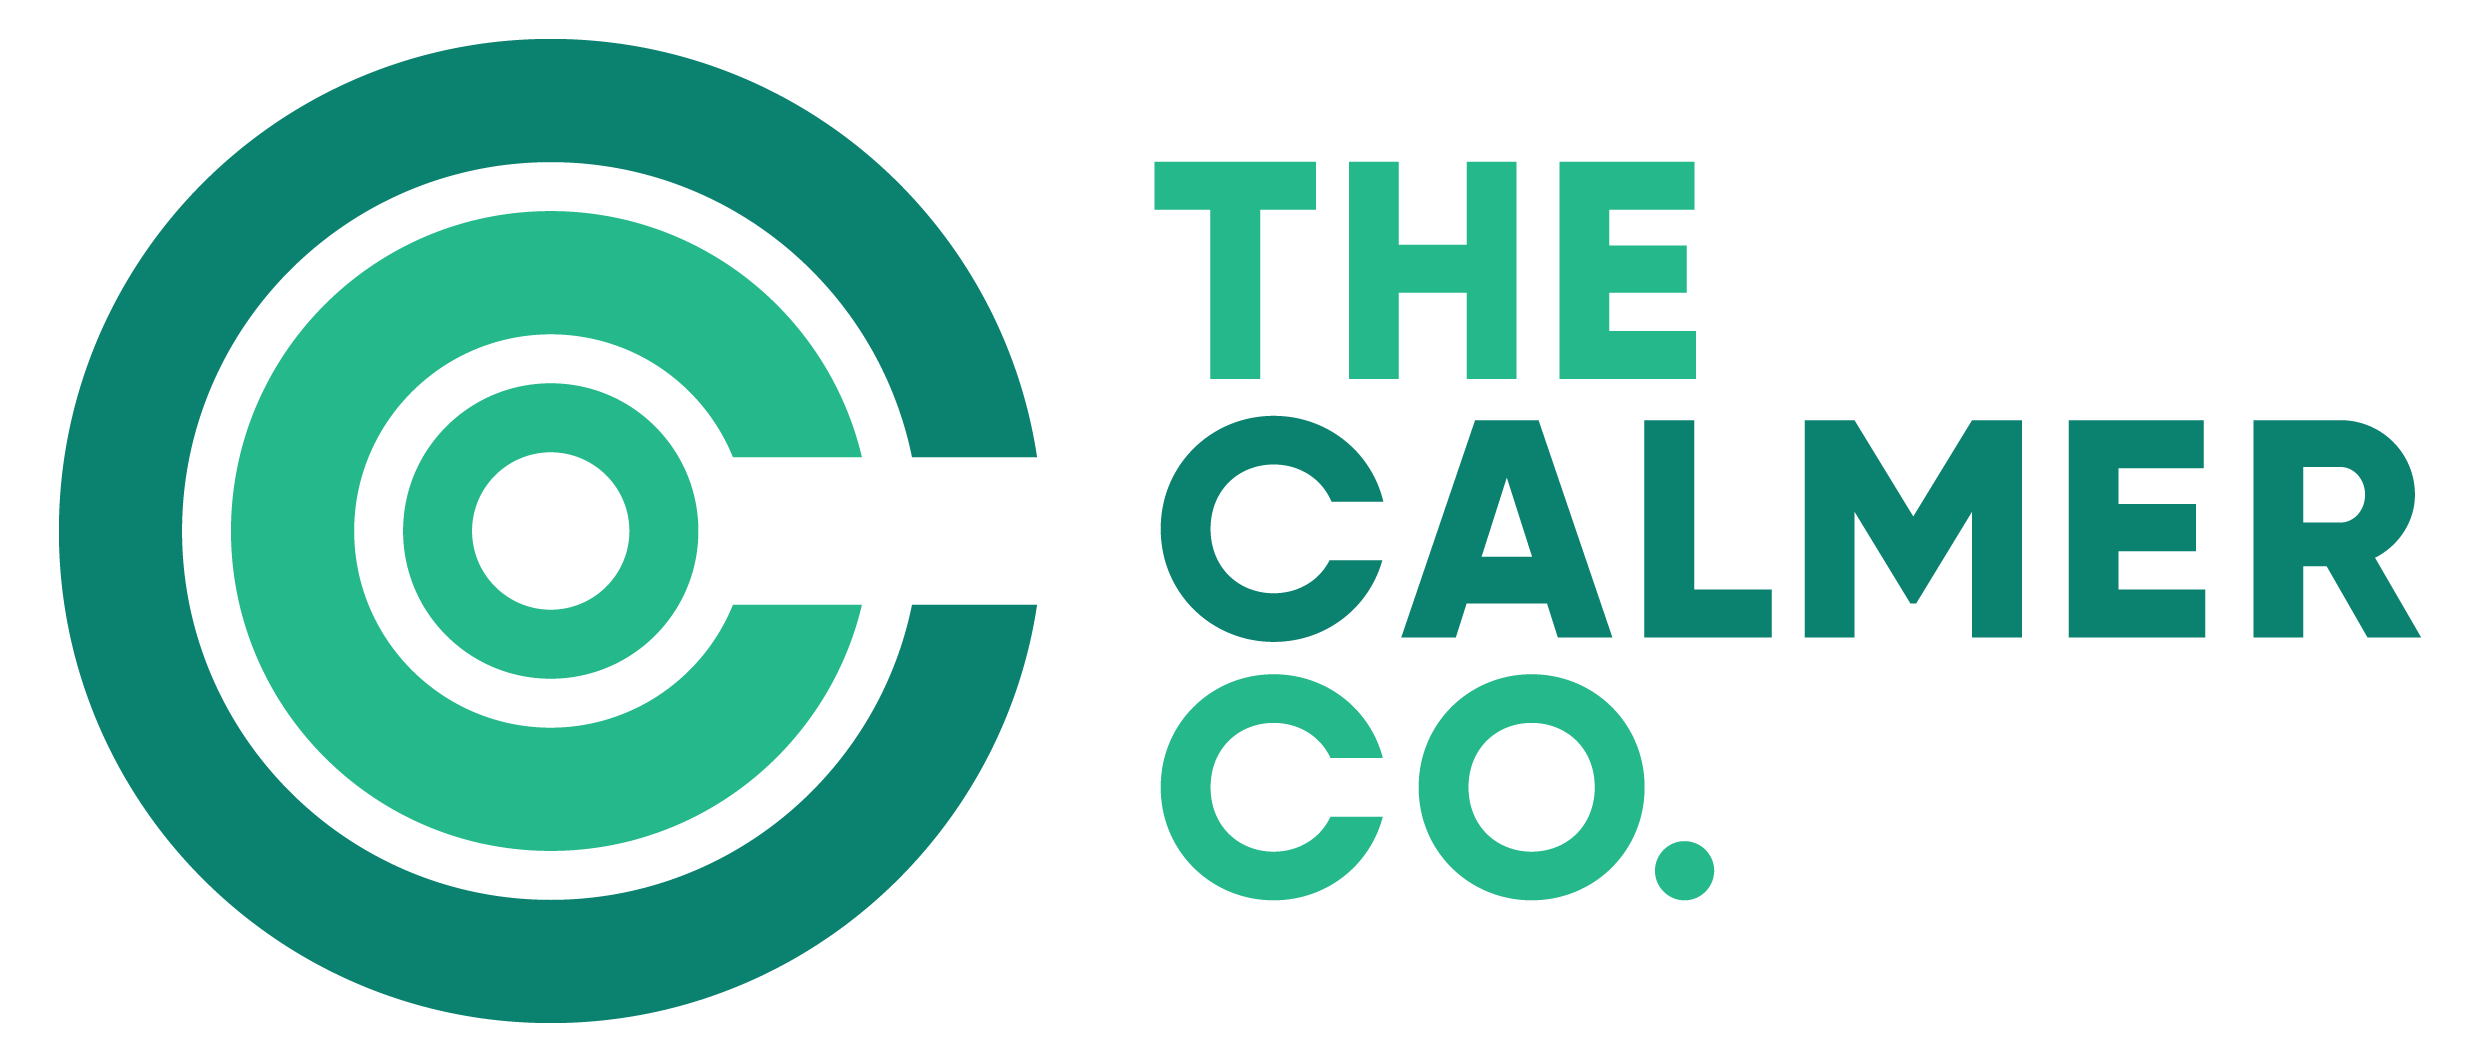 The Calmer Co International Limited (CCO:ASX) logo